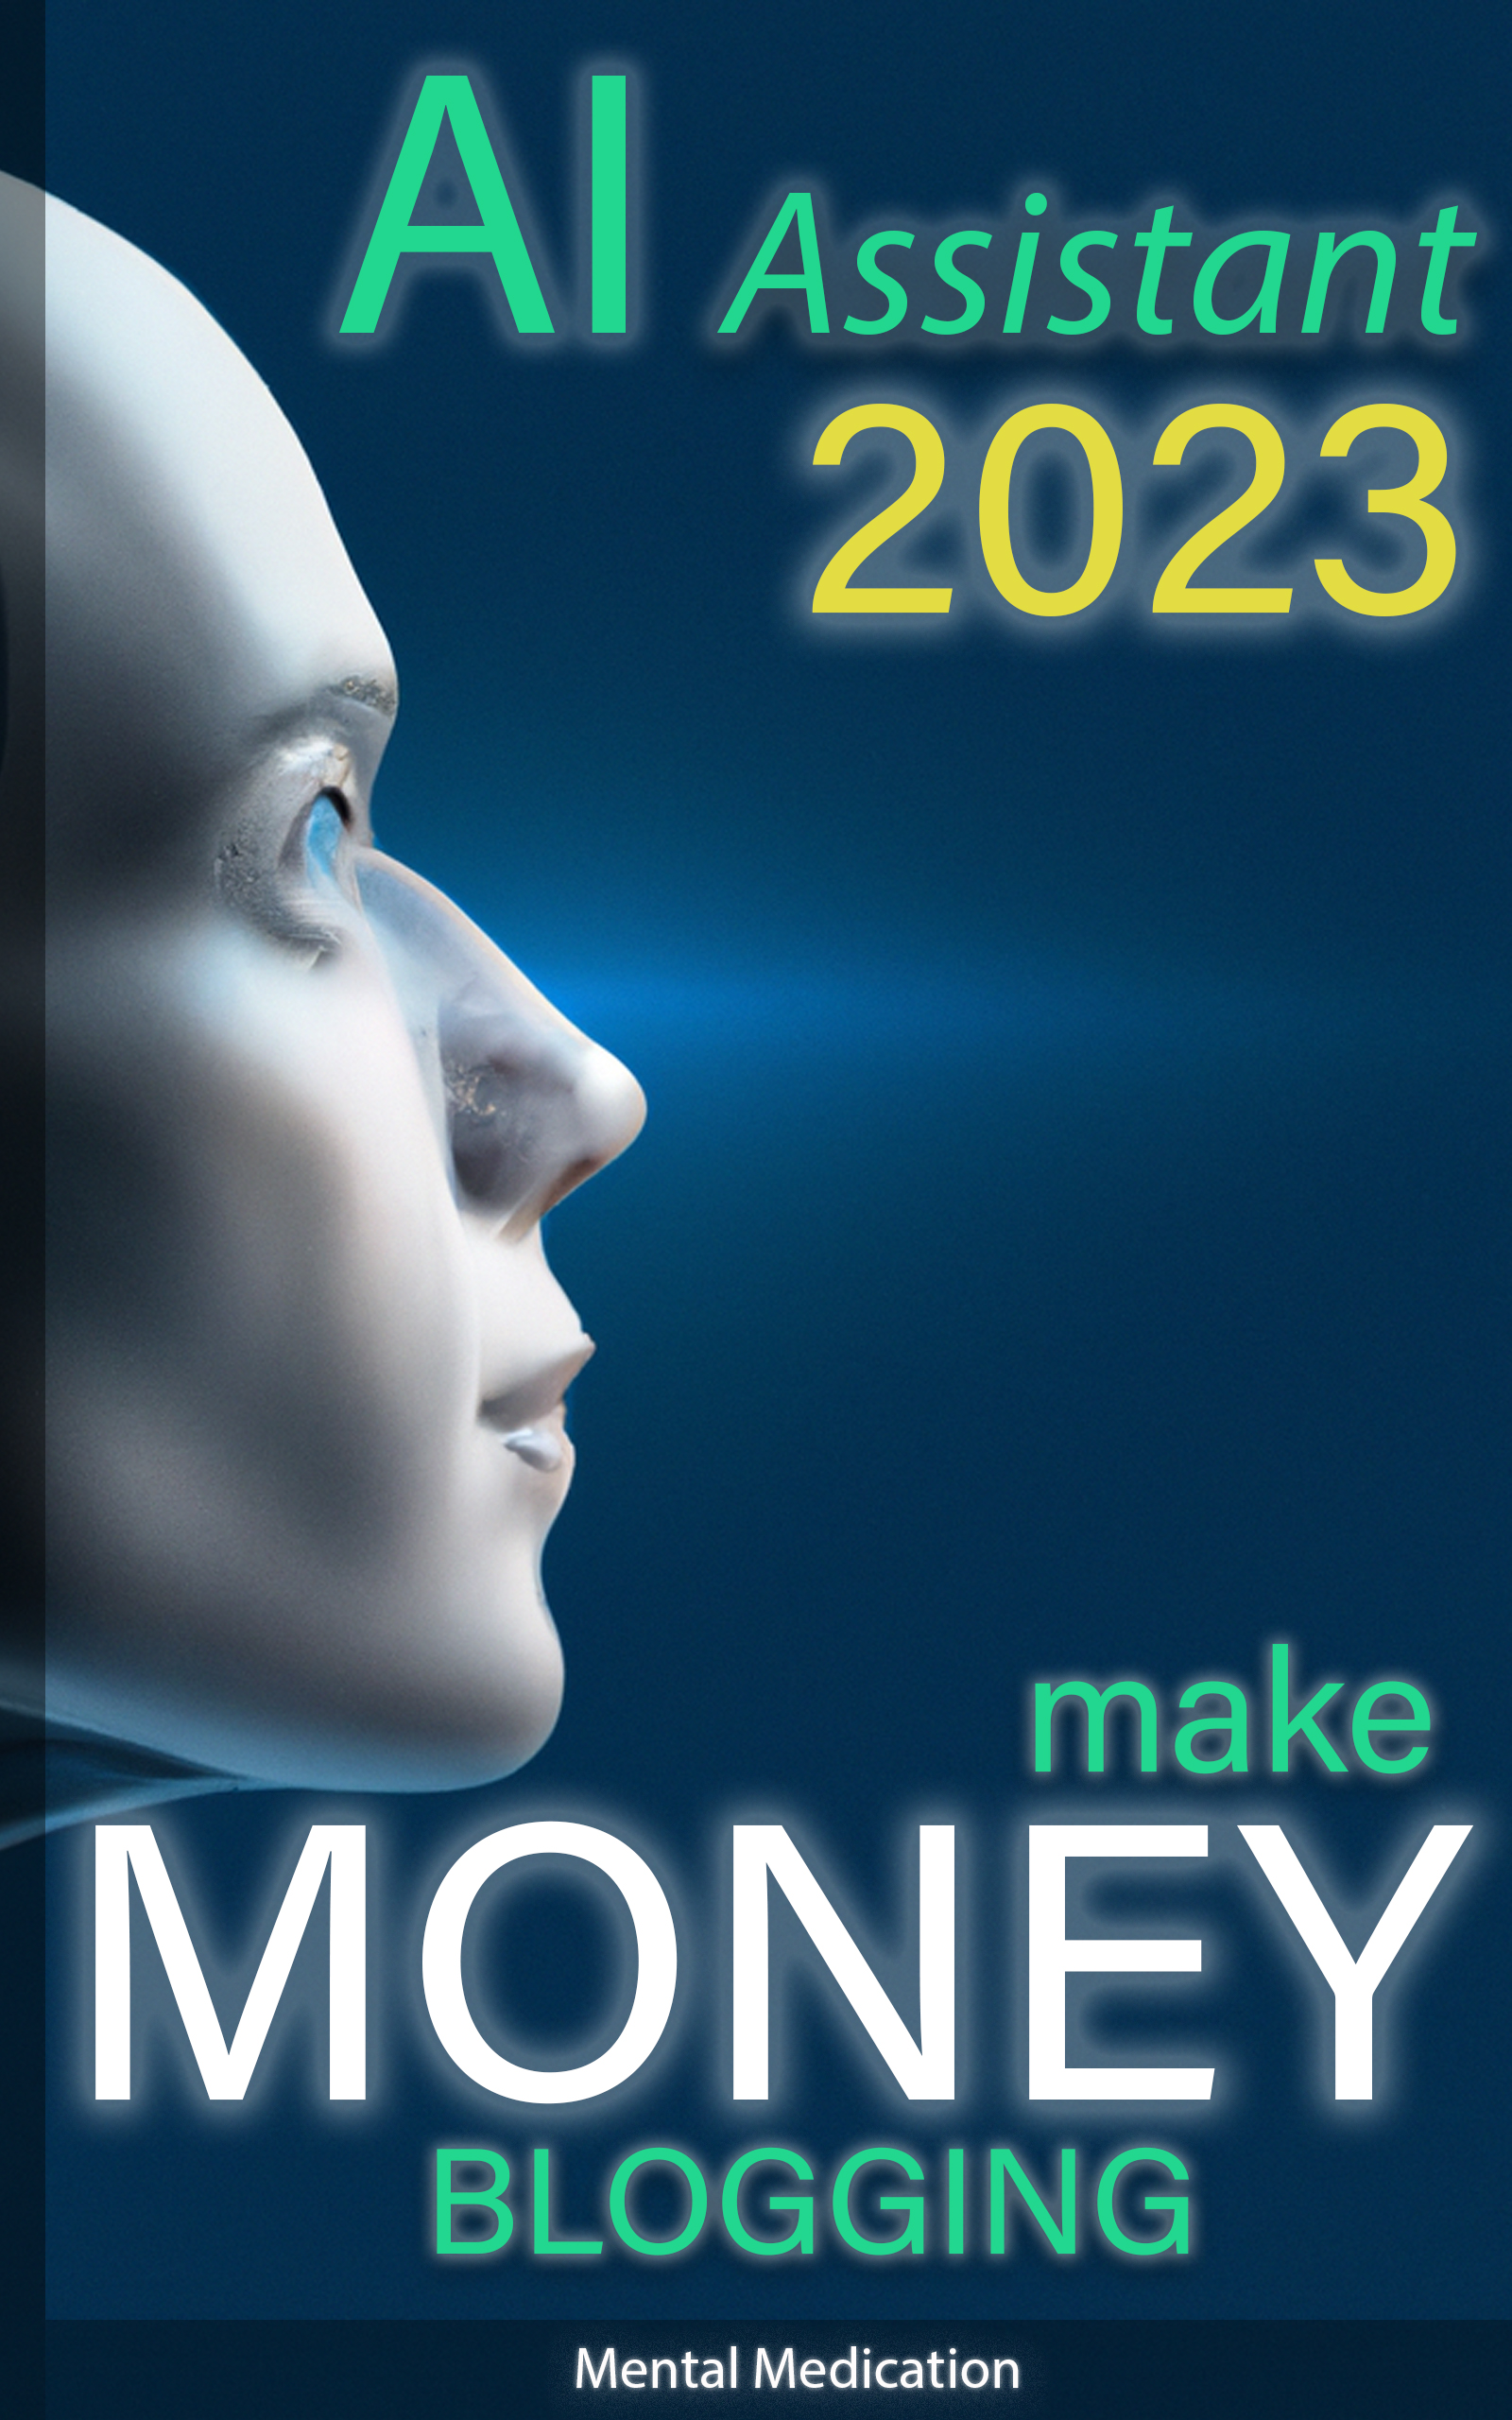 make money blogging - amazon ebook